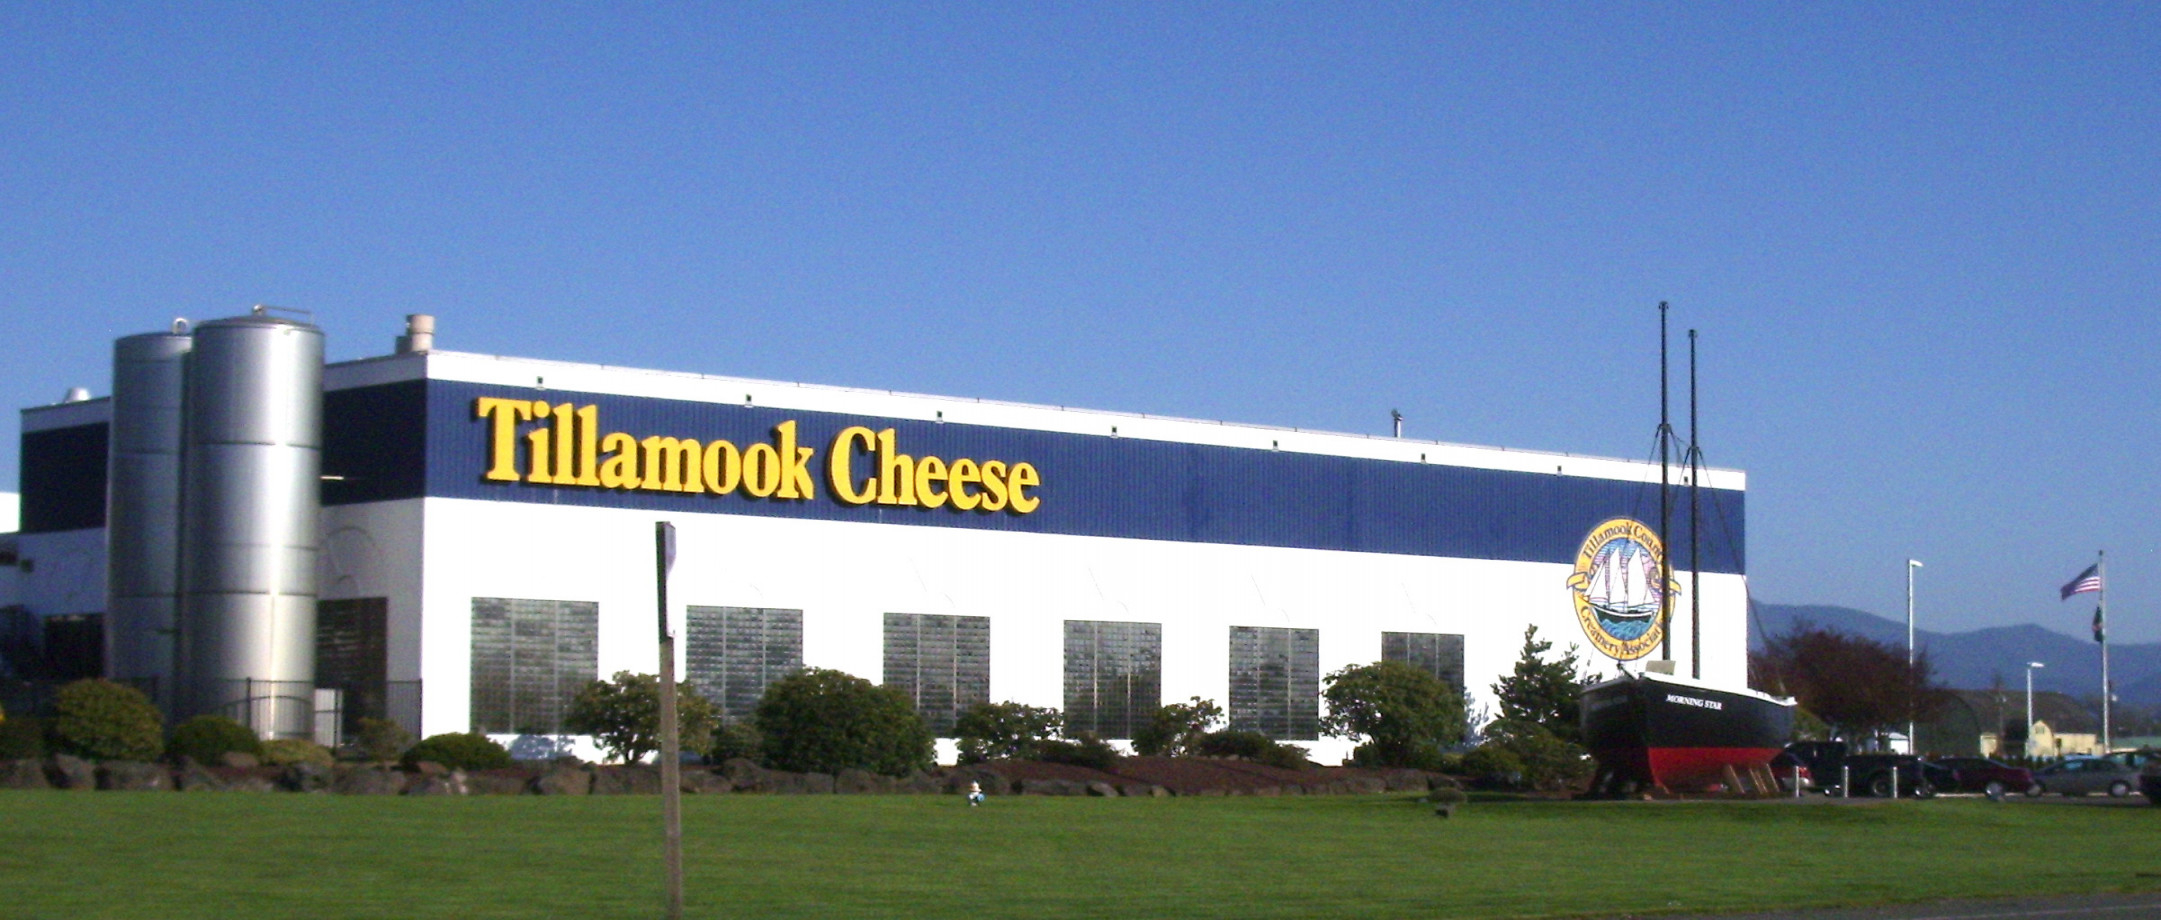 Tillamook County Creamery Association - Wikipedia